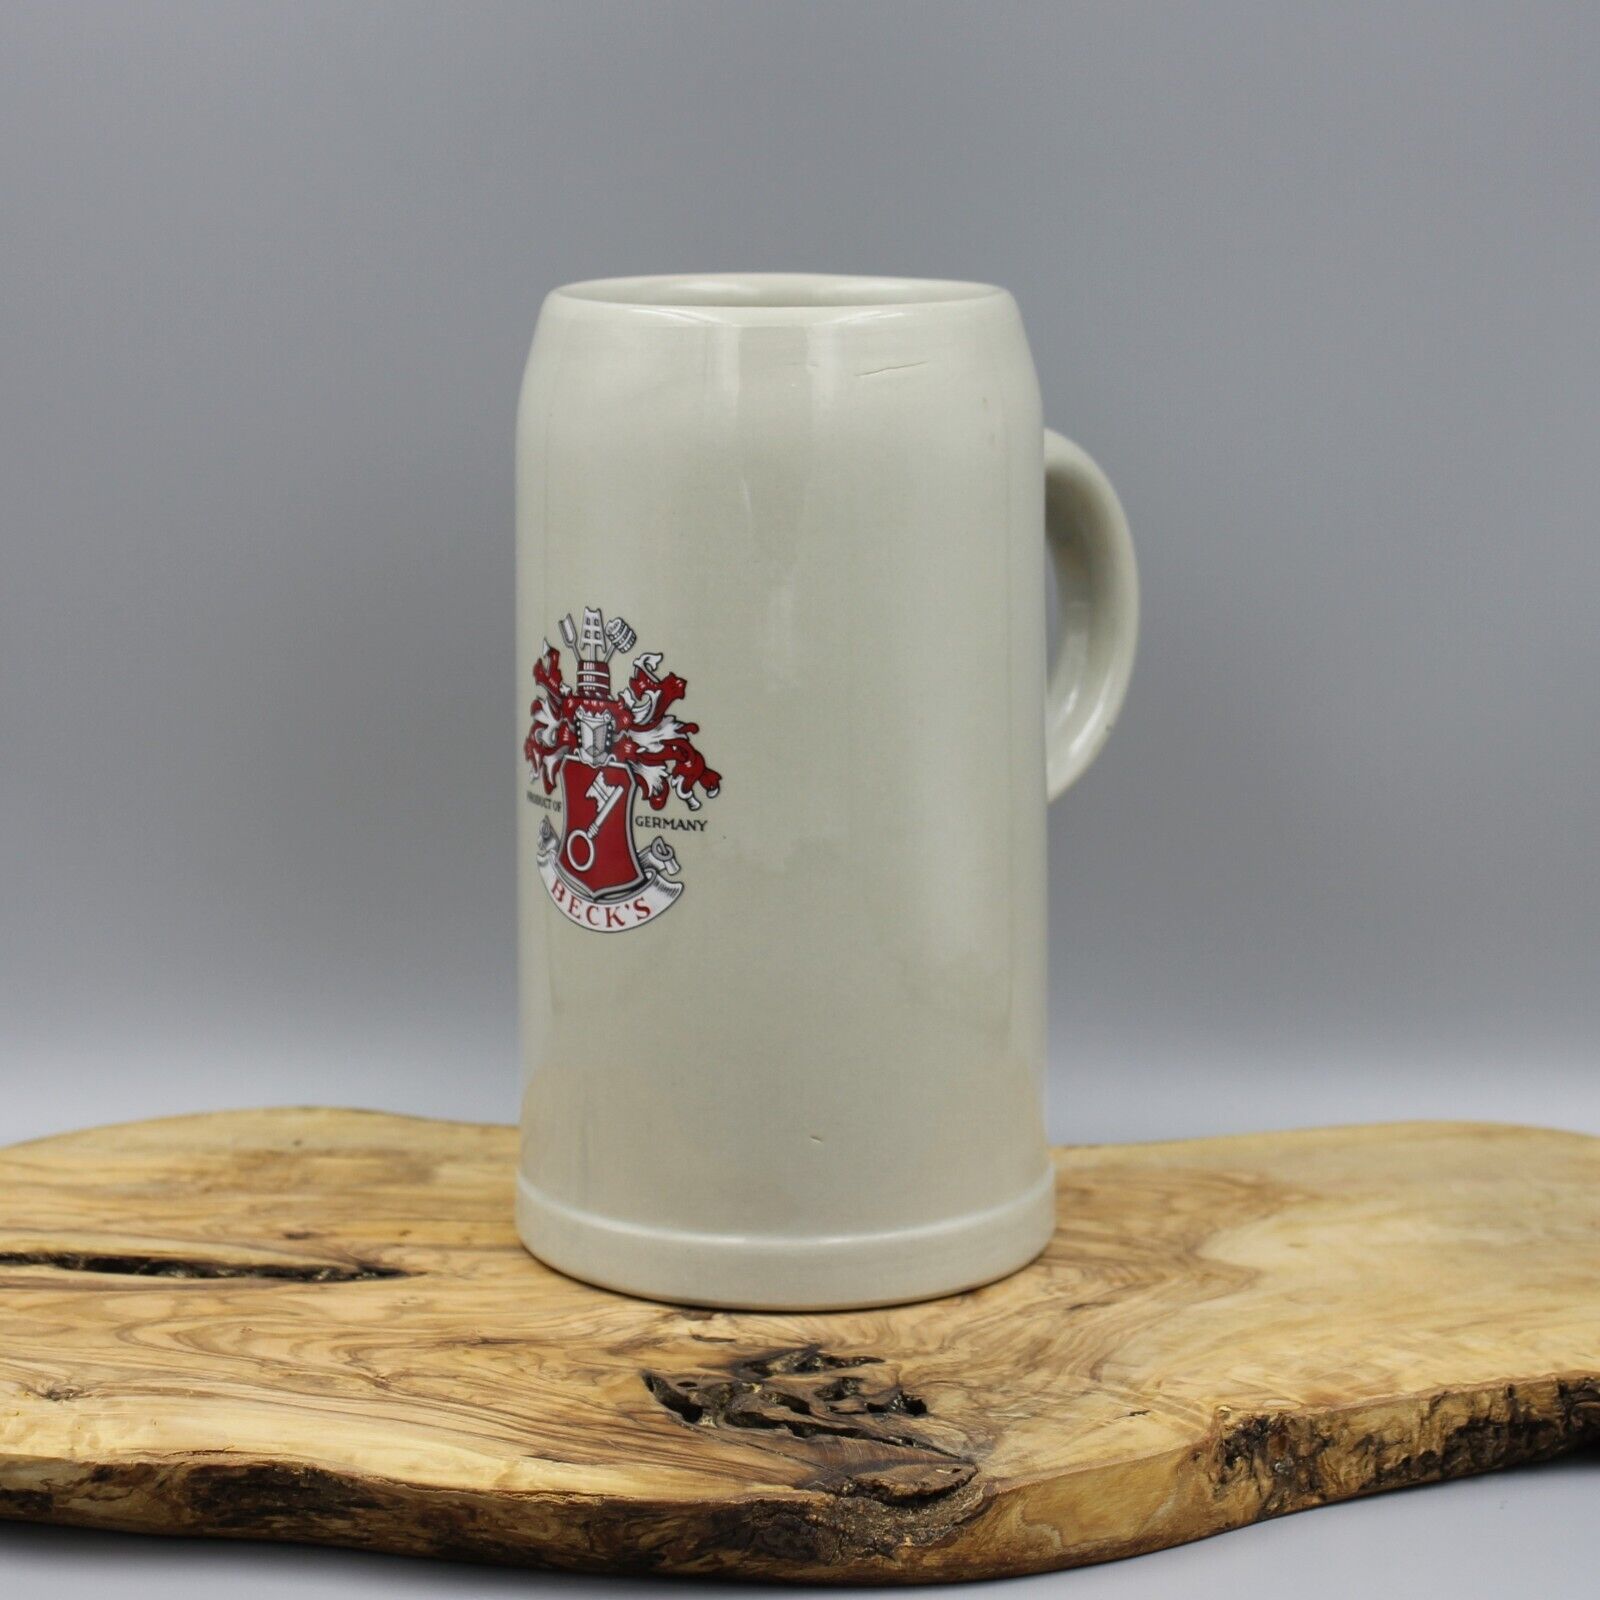 Vintage BECK's Beer Stein Product of Germany Stoneware Dishwasher Safe Handmade